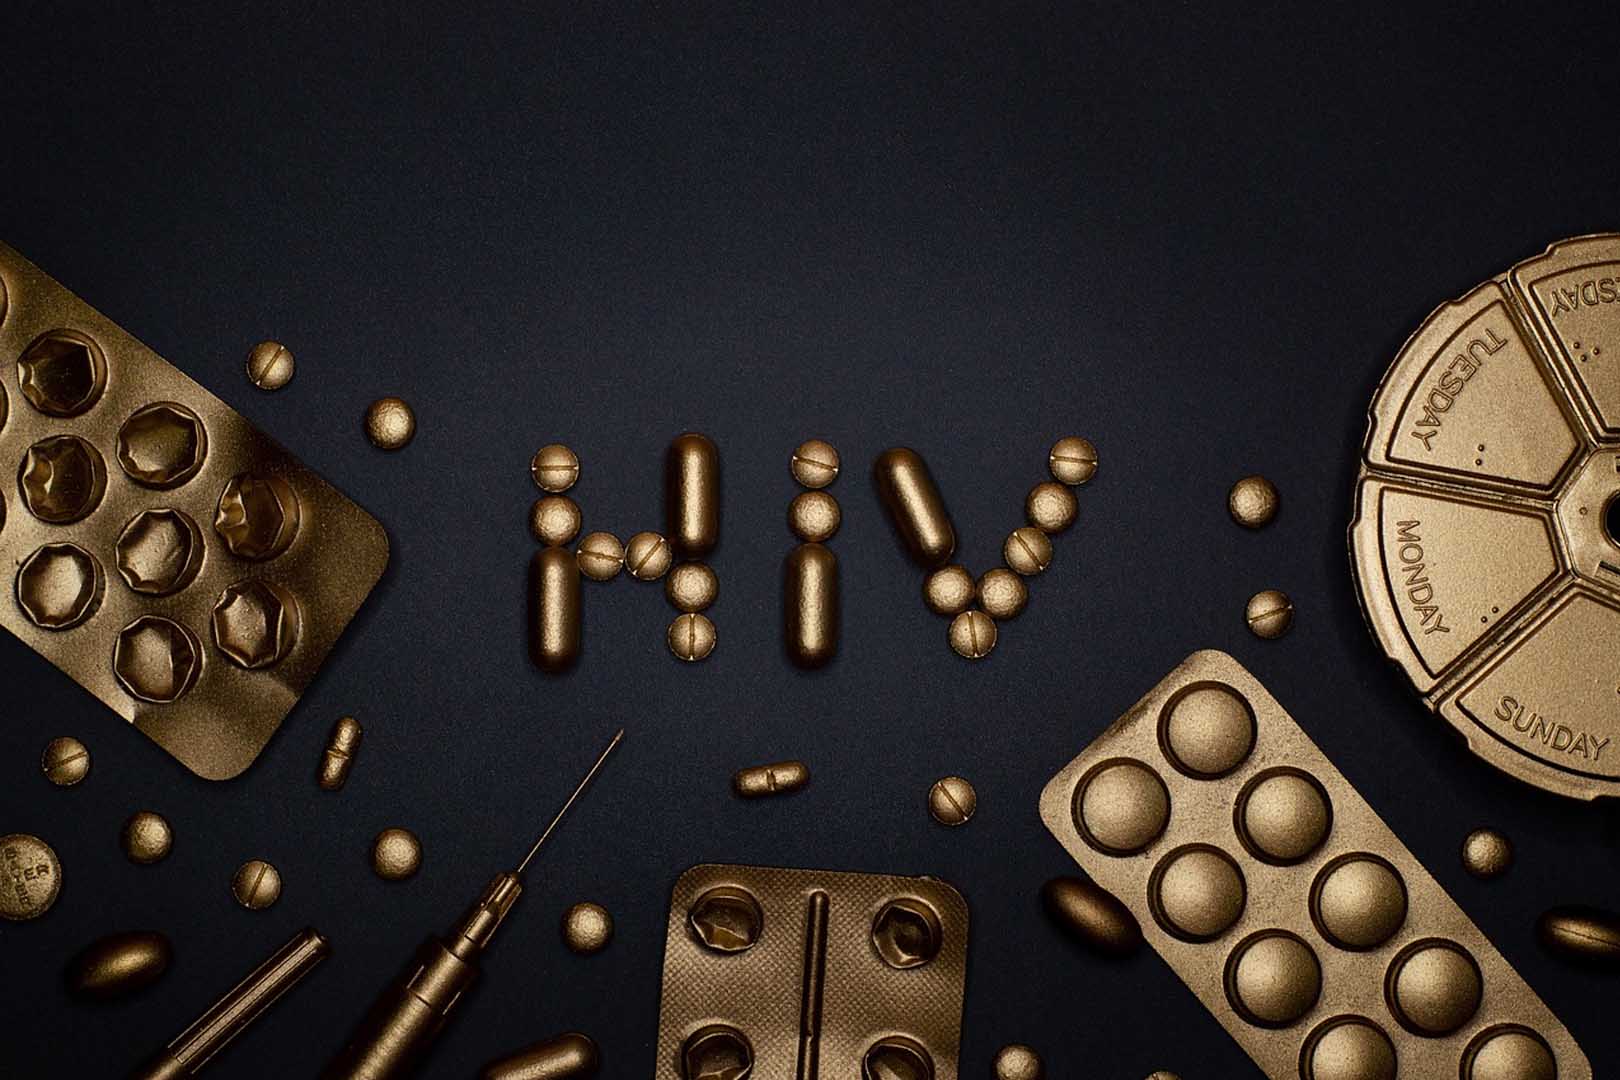 Penting! Ketahui Ciri - Ciri HIV Aids Serta Cara Pencegahannya